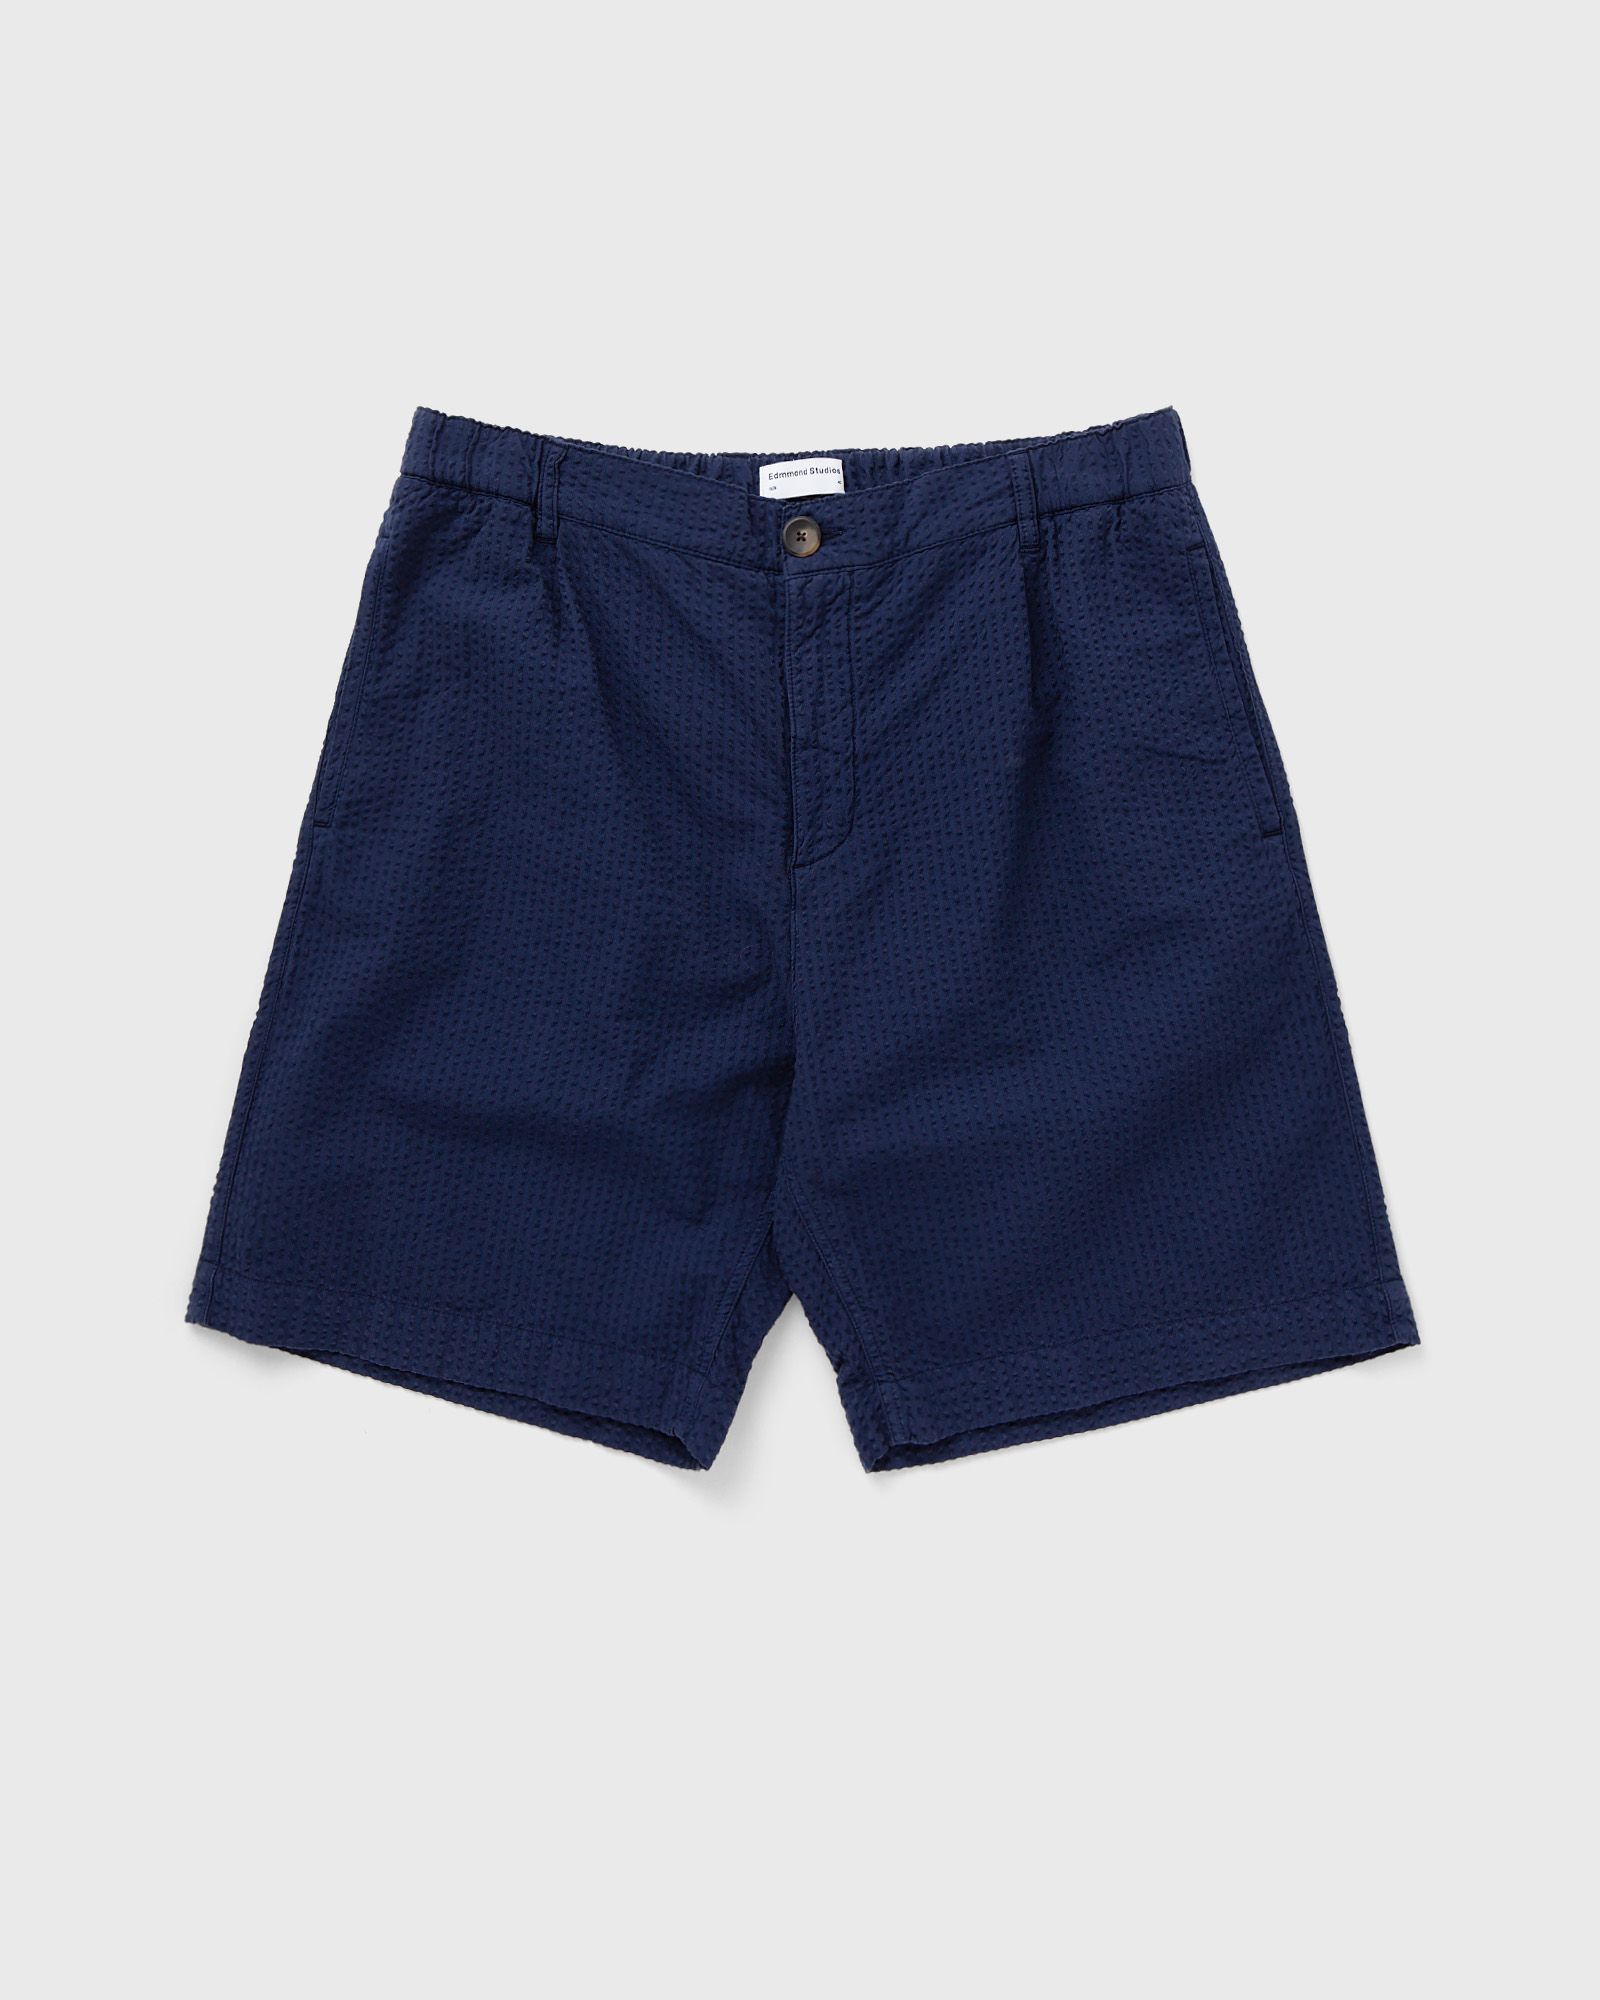 Edmmond Studios - travis short men casual shorts blue in größe:xs